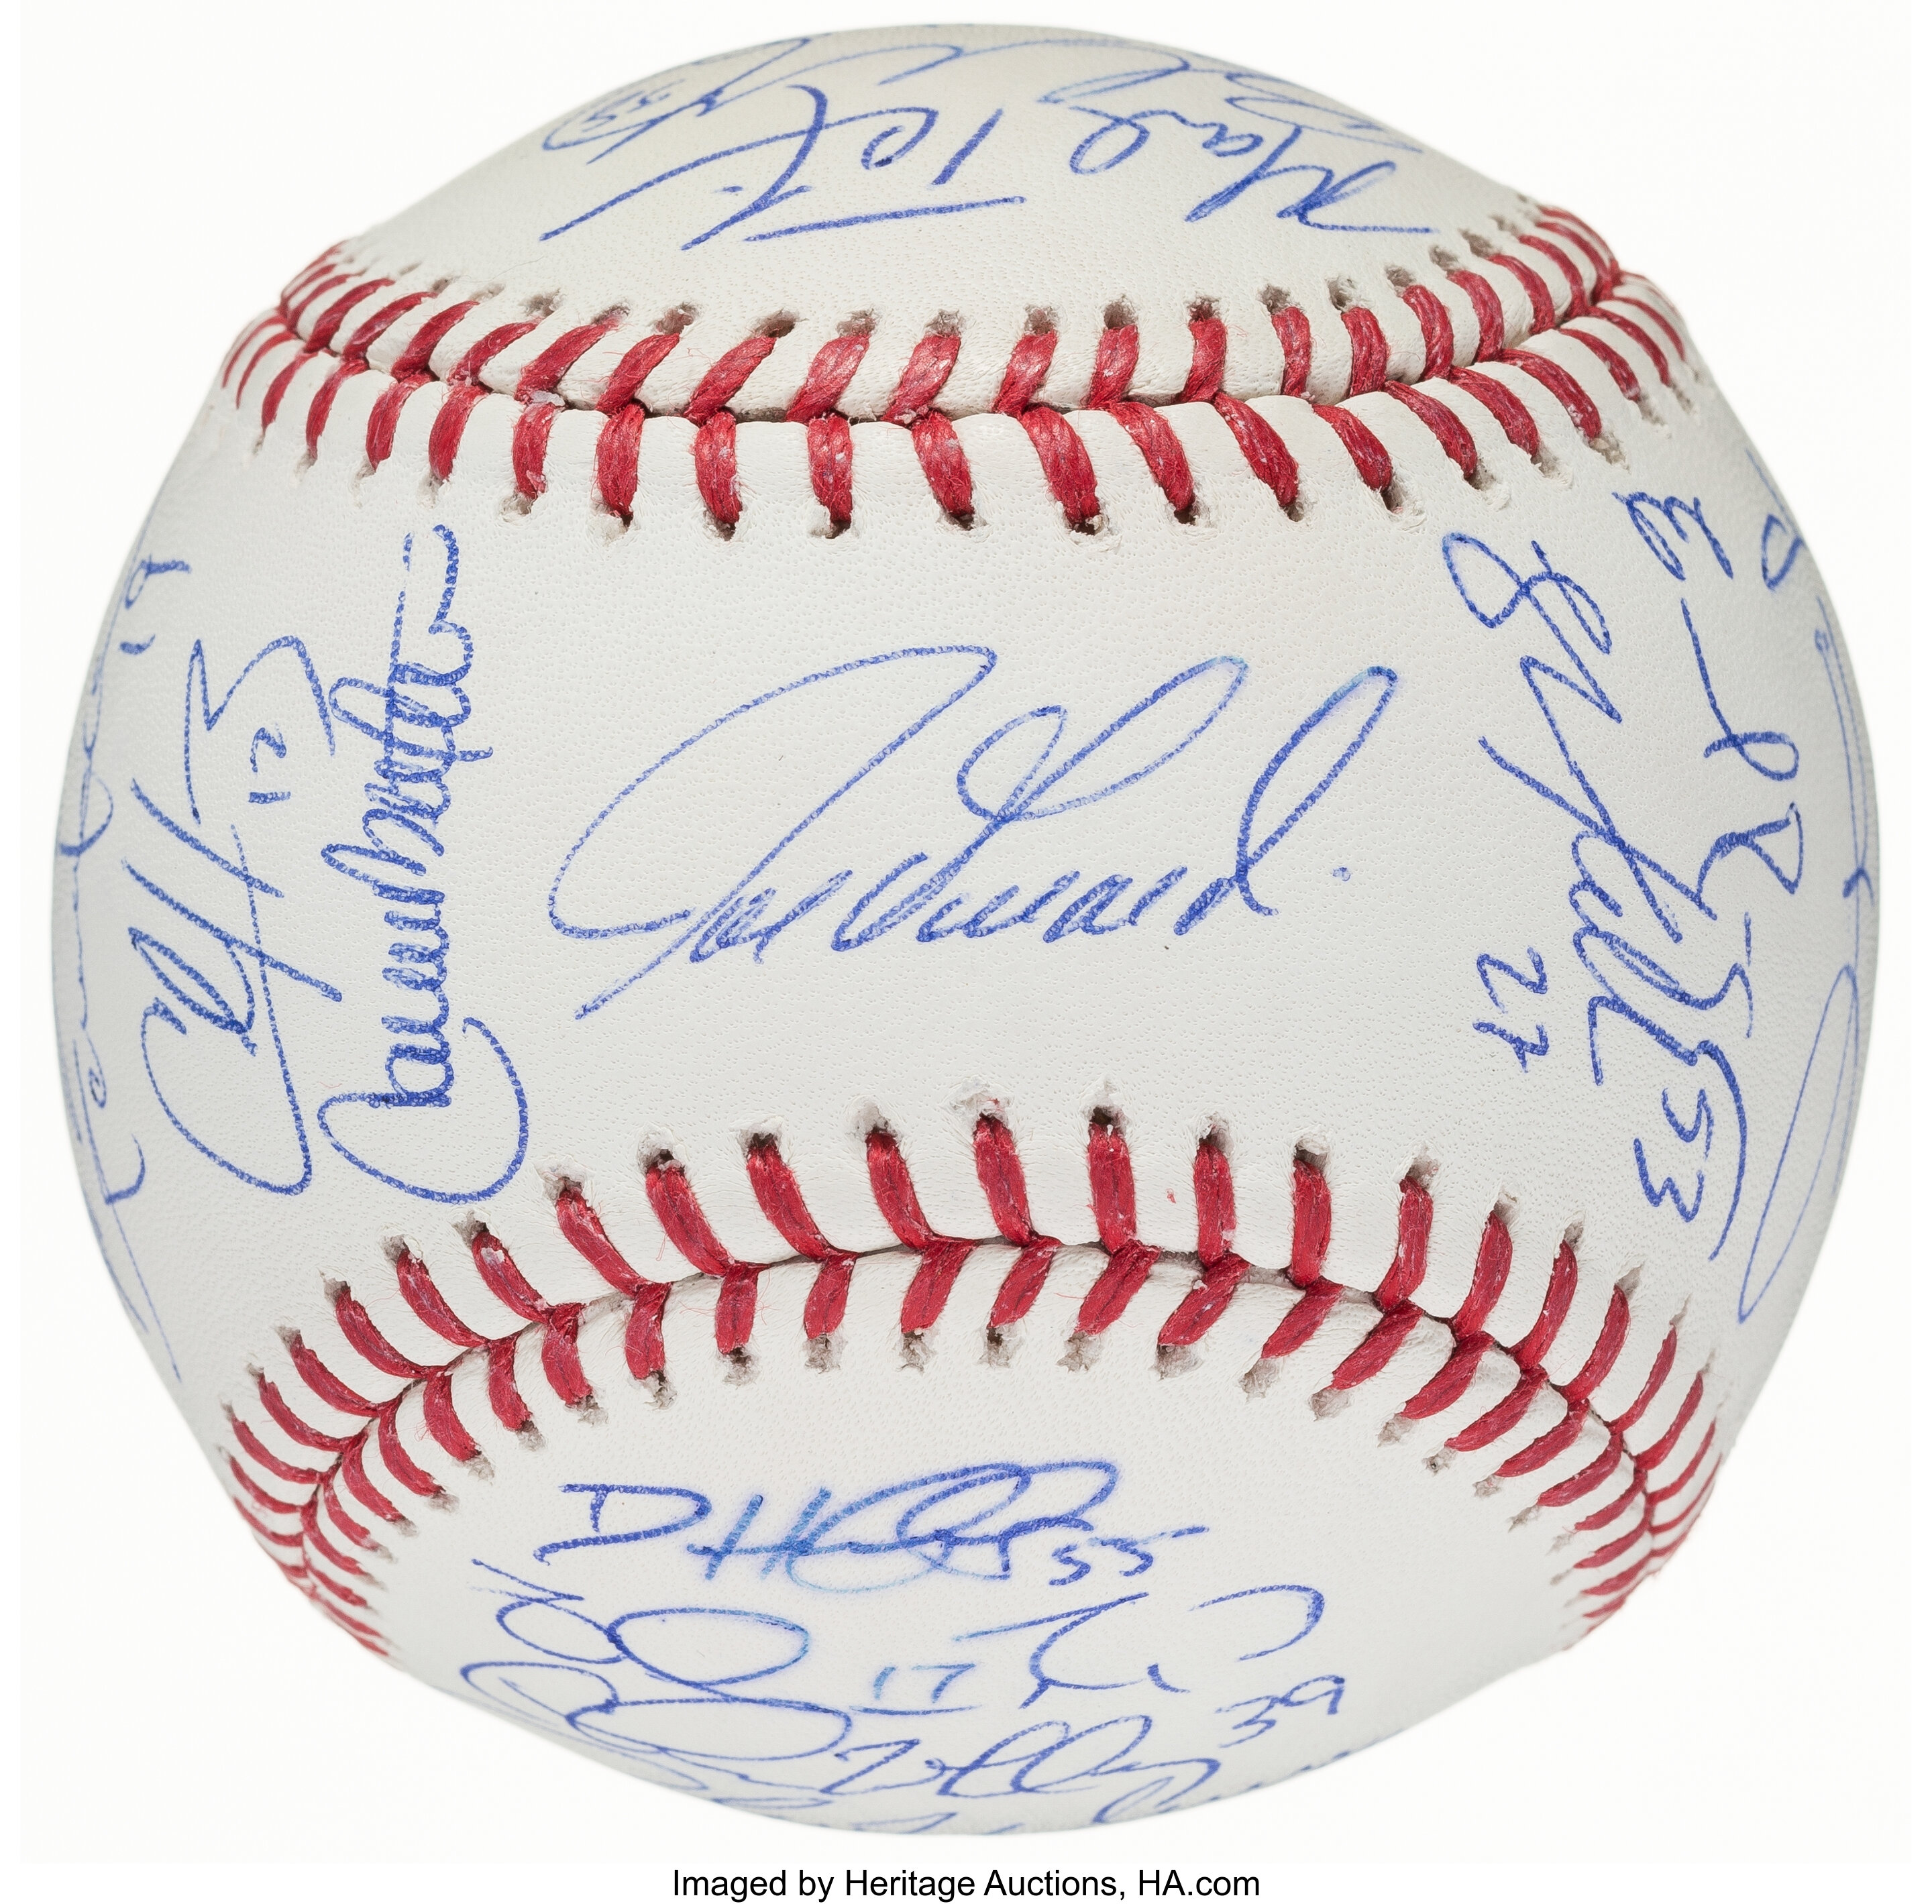 Derek Jeter Signed Major League Baseball PSA DNA Coa Yankees Autographed